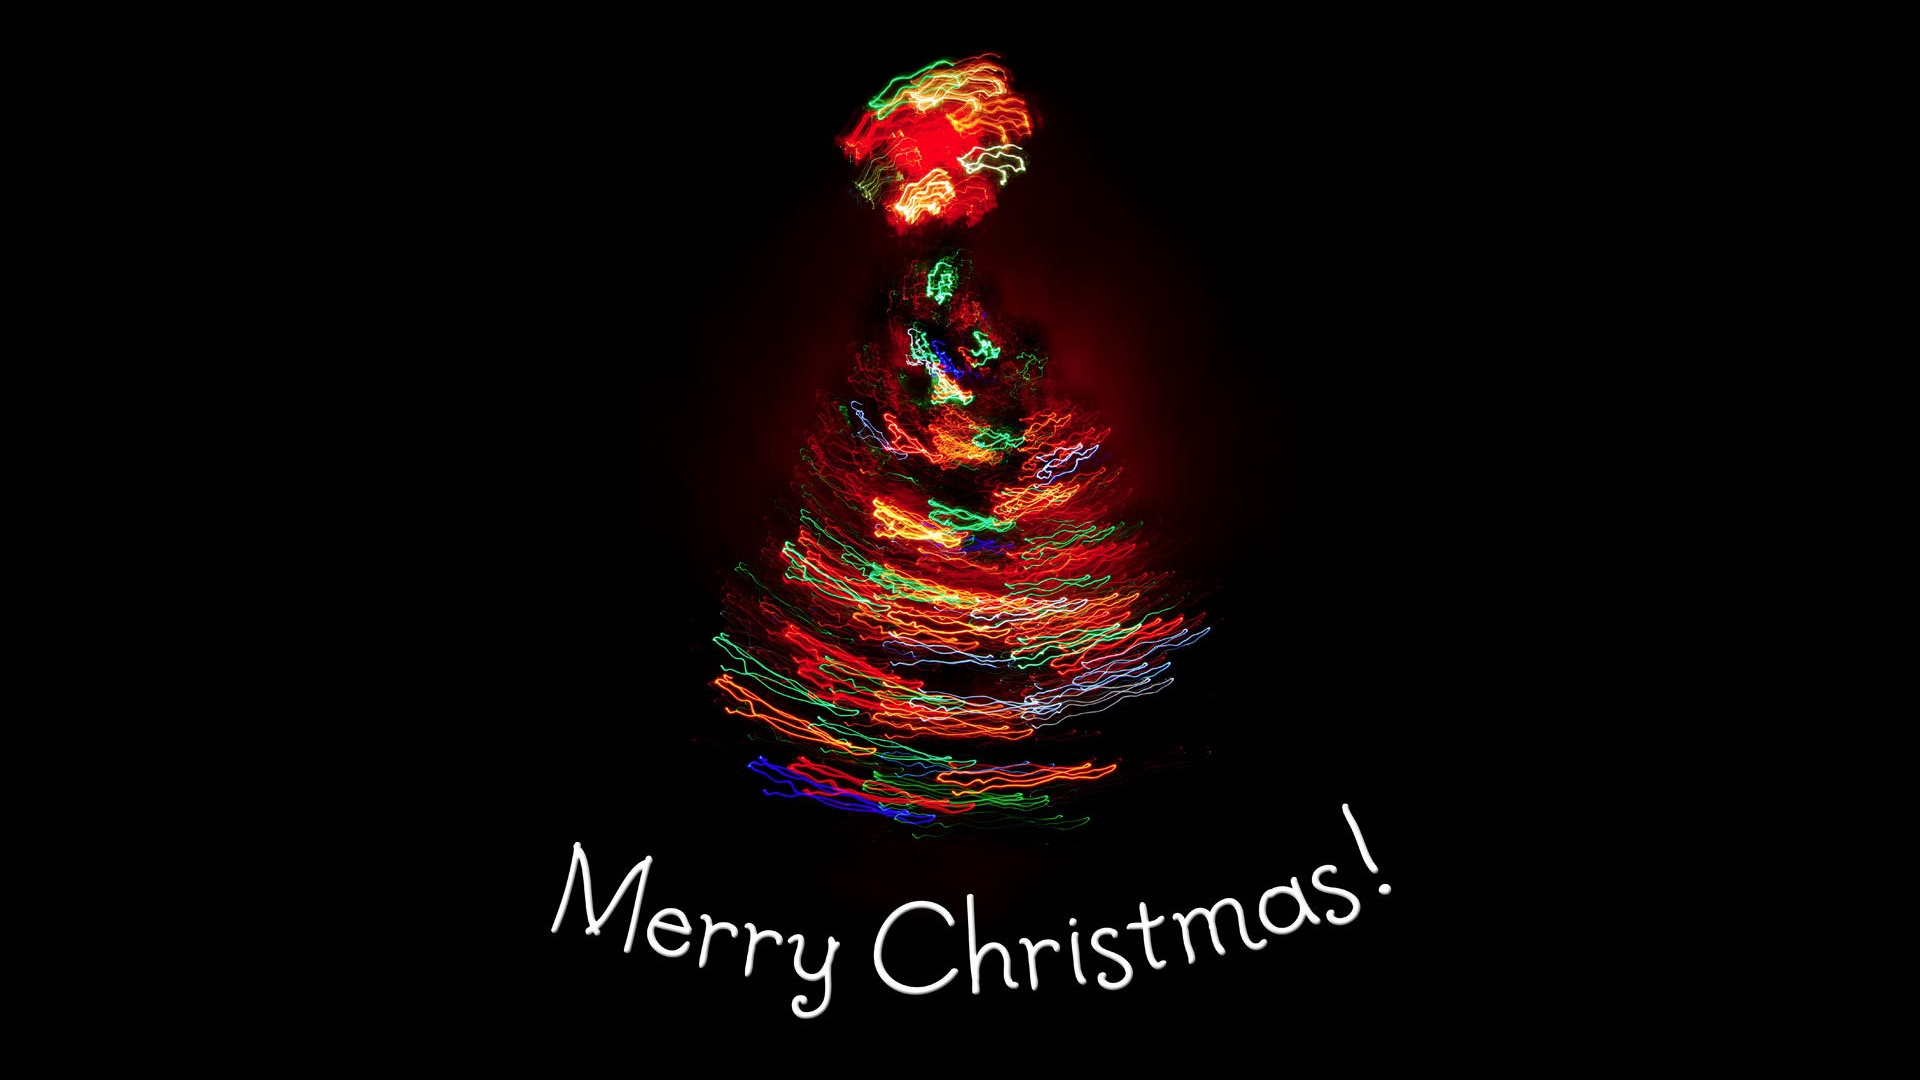 Merry Christmas Wallpapers HD free download | PixelsTalk.Net